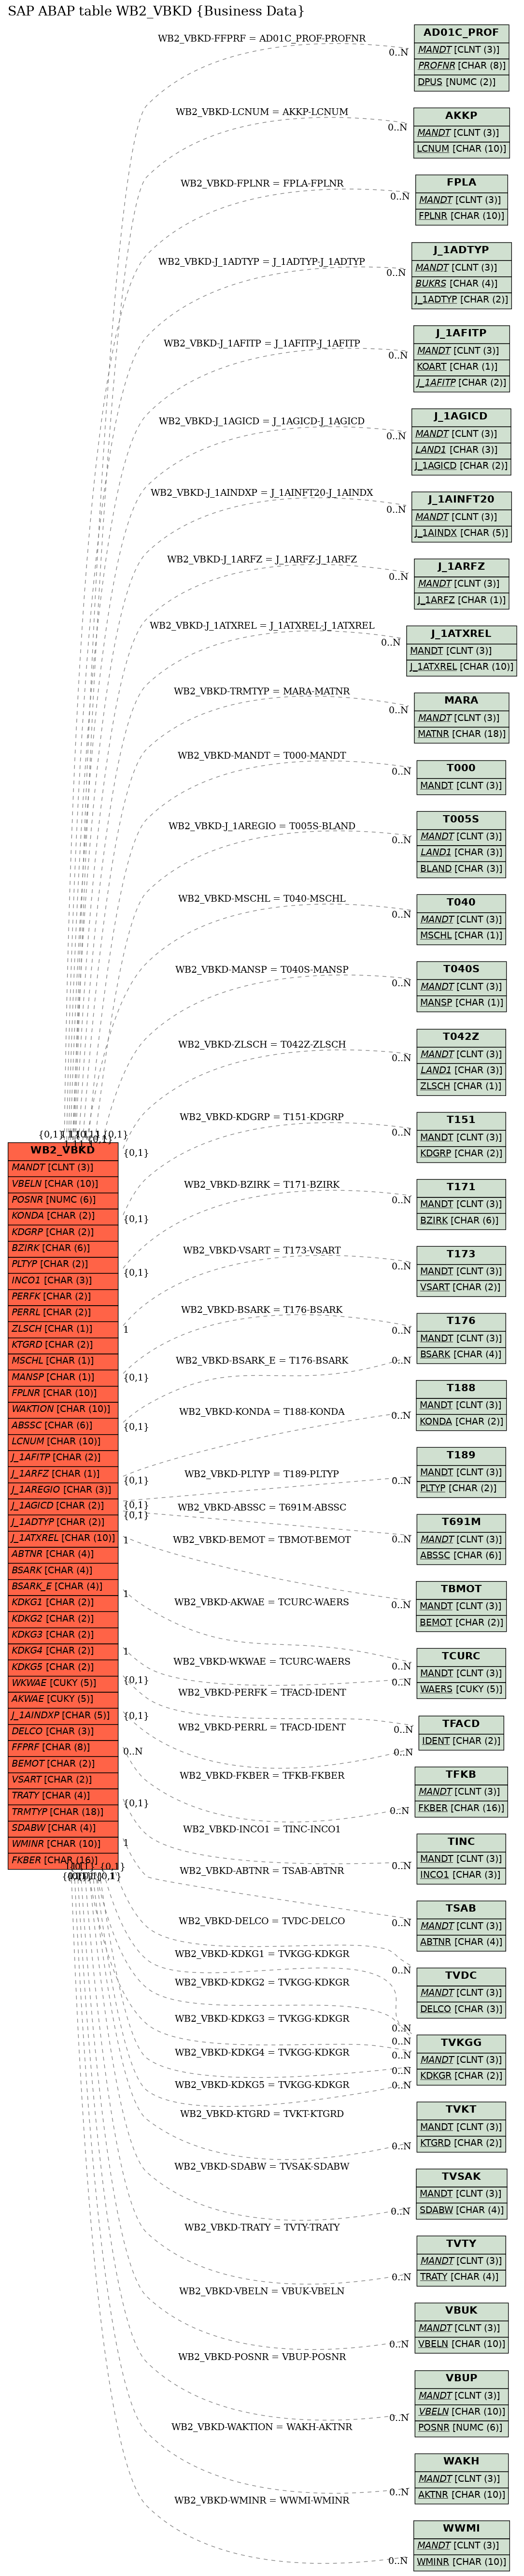 E-R Diagram for table WB2_VBKD (Business Data)